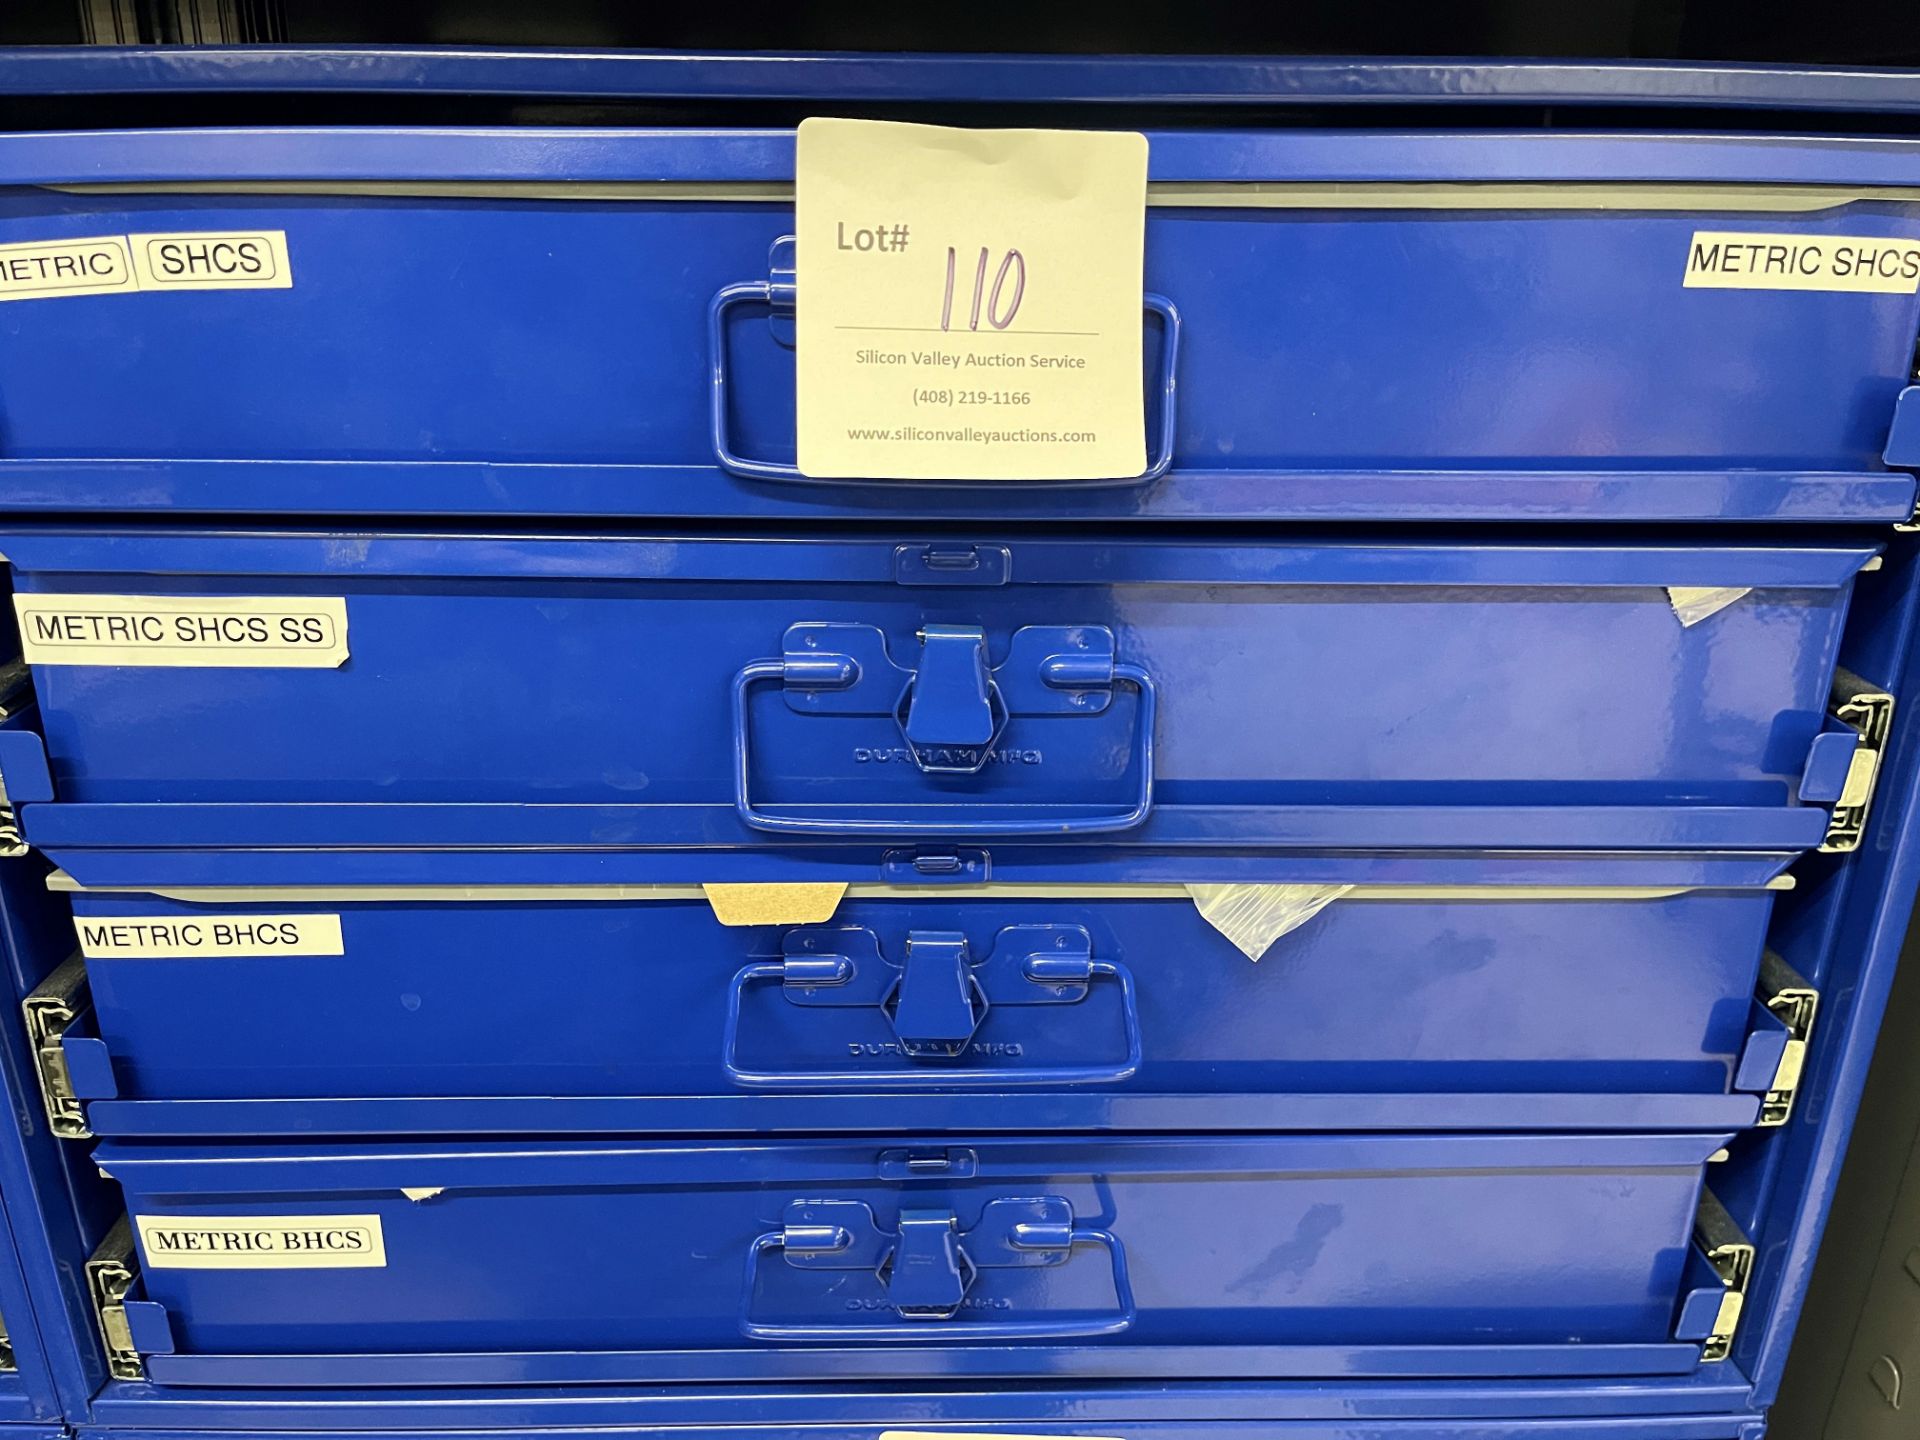 Durham Mfg blue metal storage cabinet with four drawers